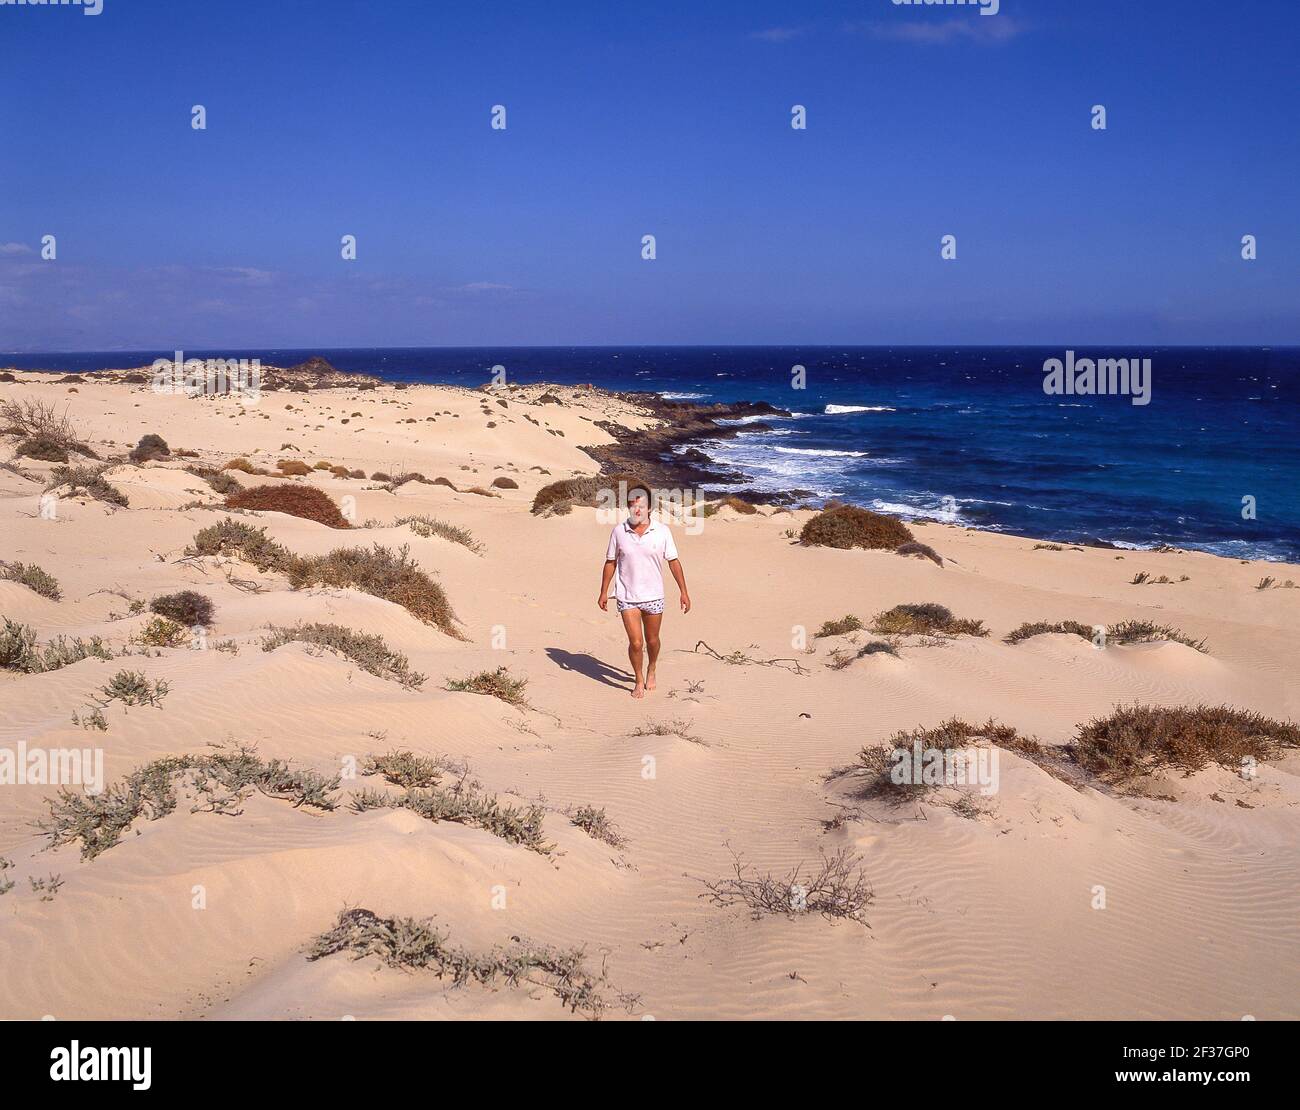 Küstensanddünen, Playa Larga, Fuerteventura, Kanarische Inseln, Spanien Stockfoto